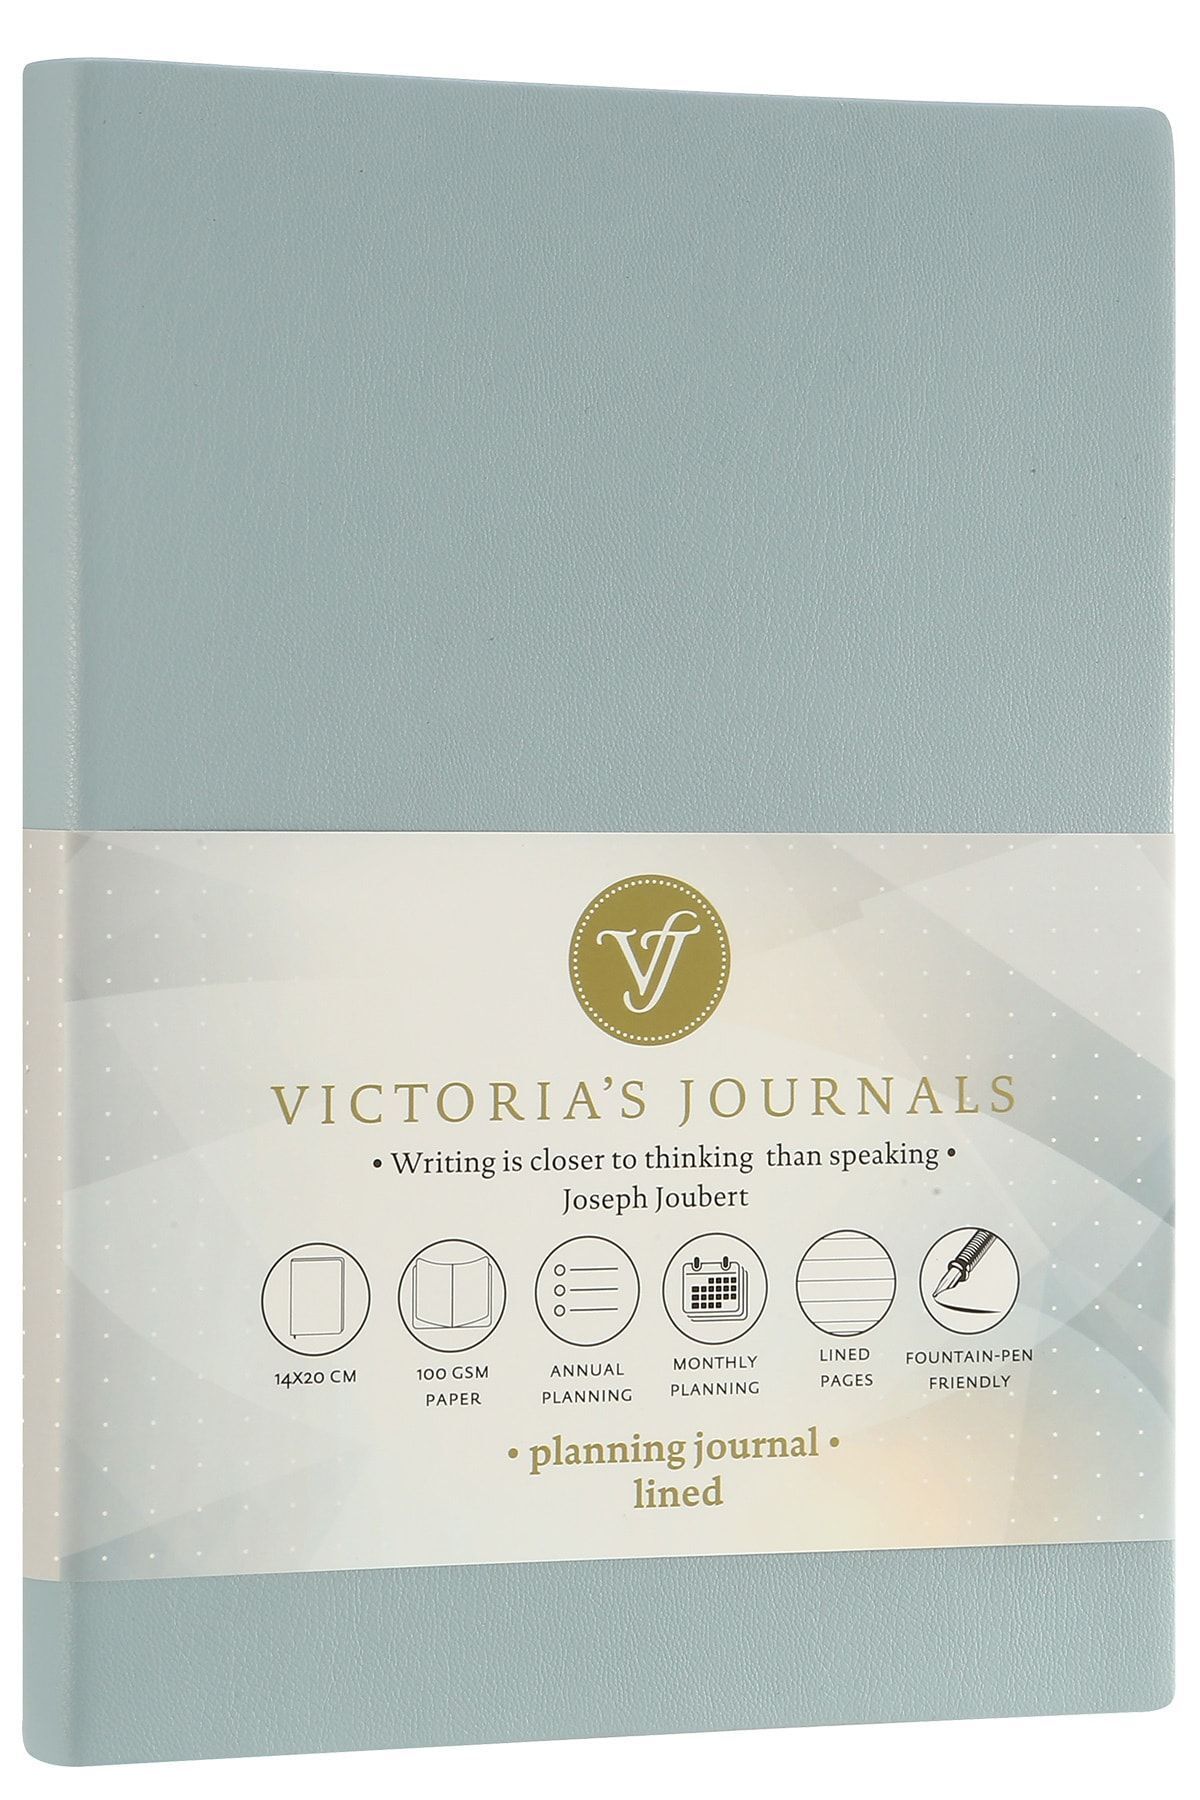 Victoria's Journals Smyth Pastel Tarihsiz Kalın Yapraklı Çizgili Defter 15x21 Cm (A5) Mavi